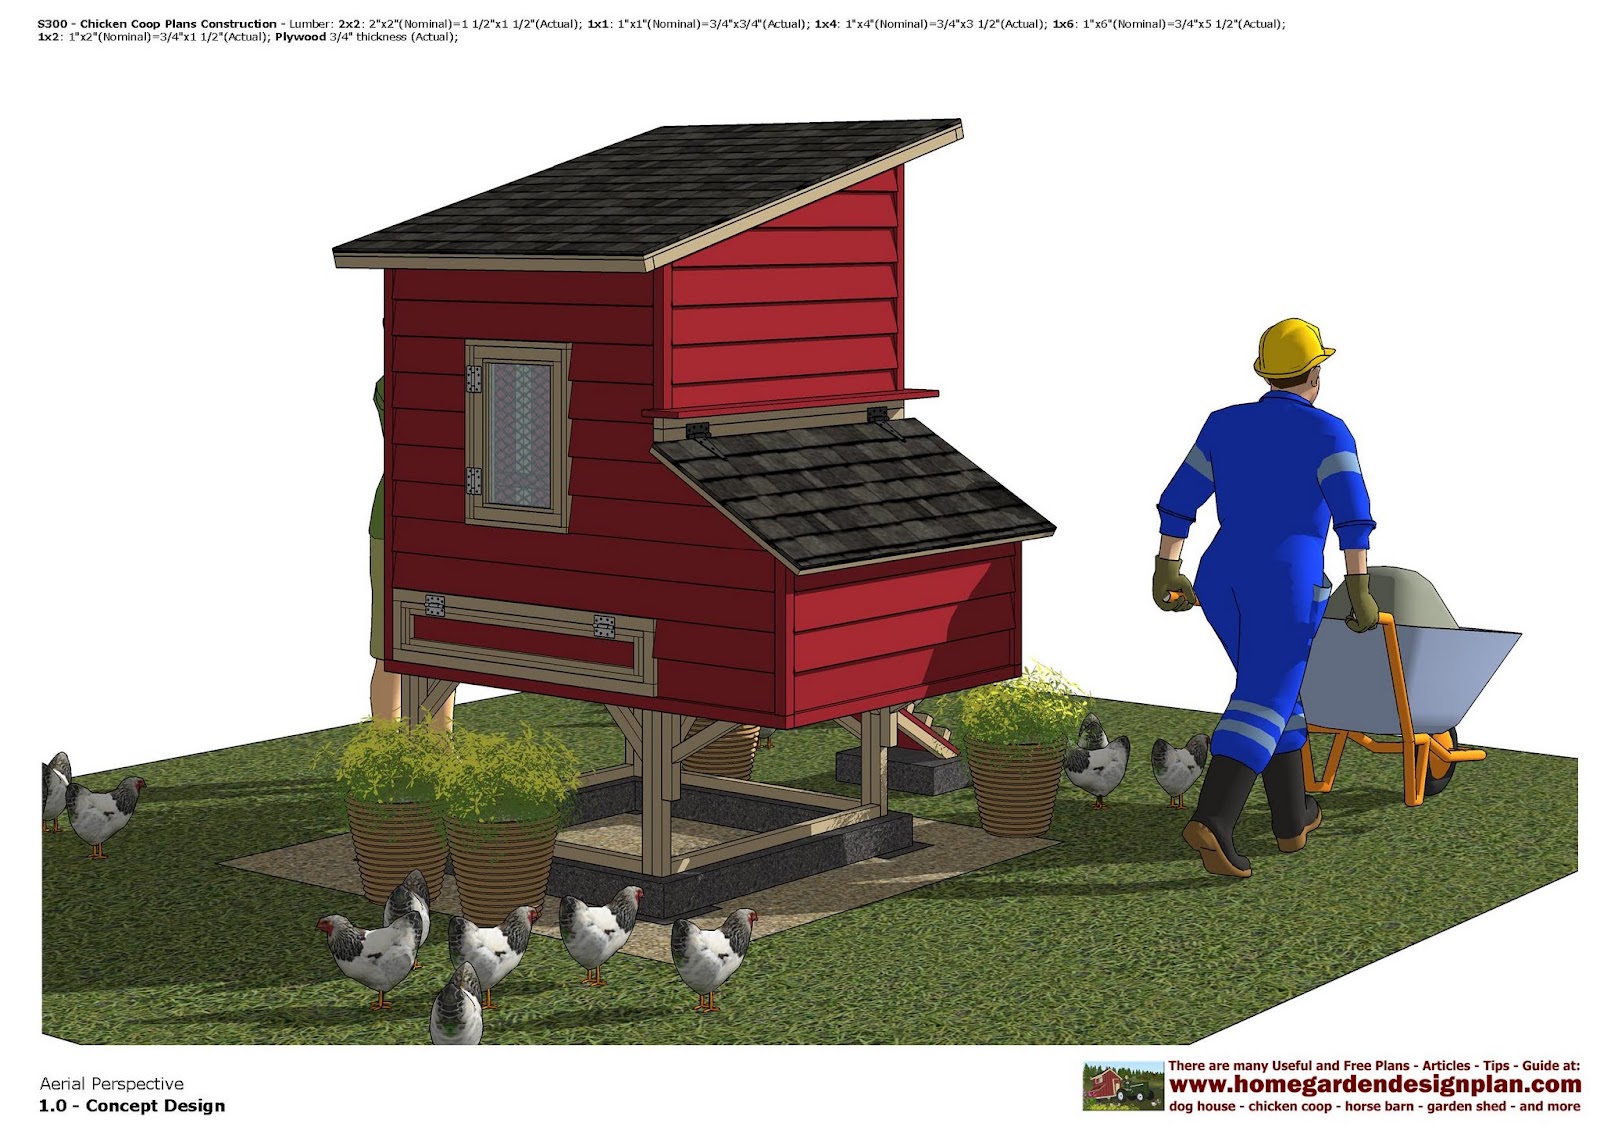 garden plans: S300 _ Chicken Coop Plans Construction - Chicken Coop ...